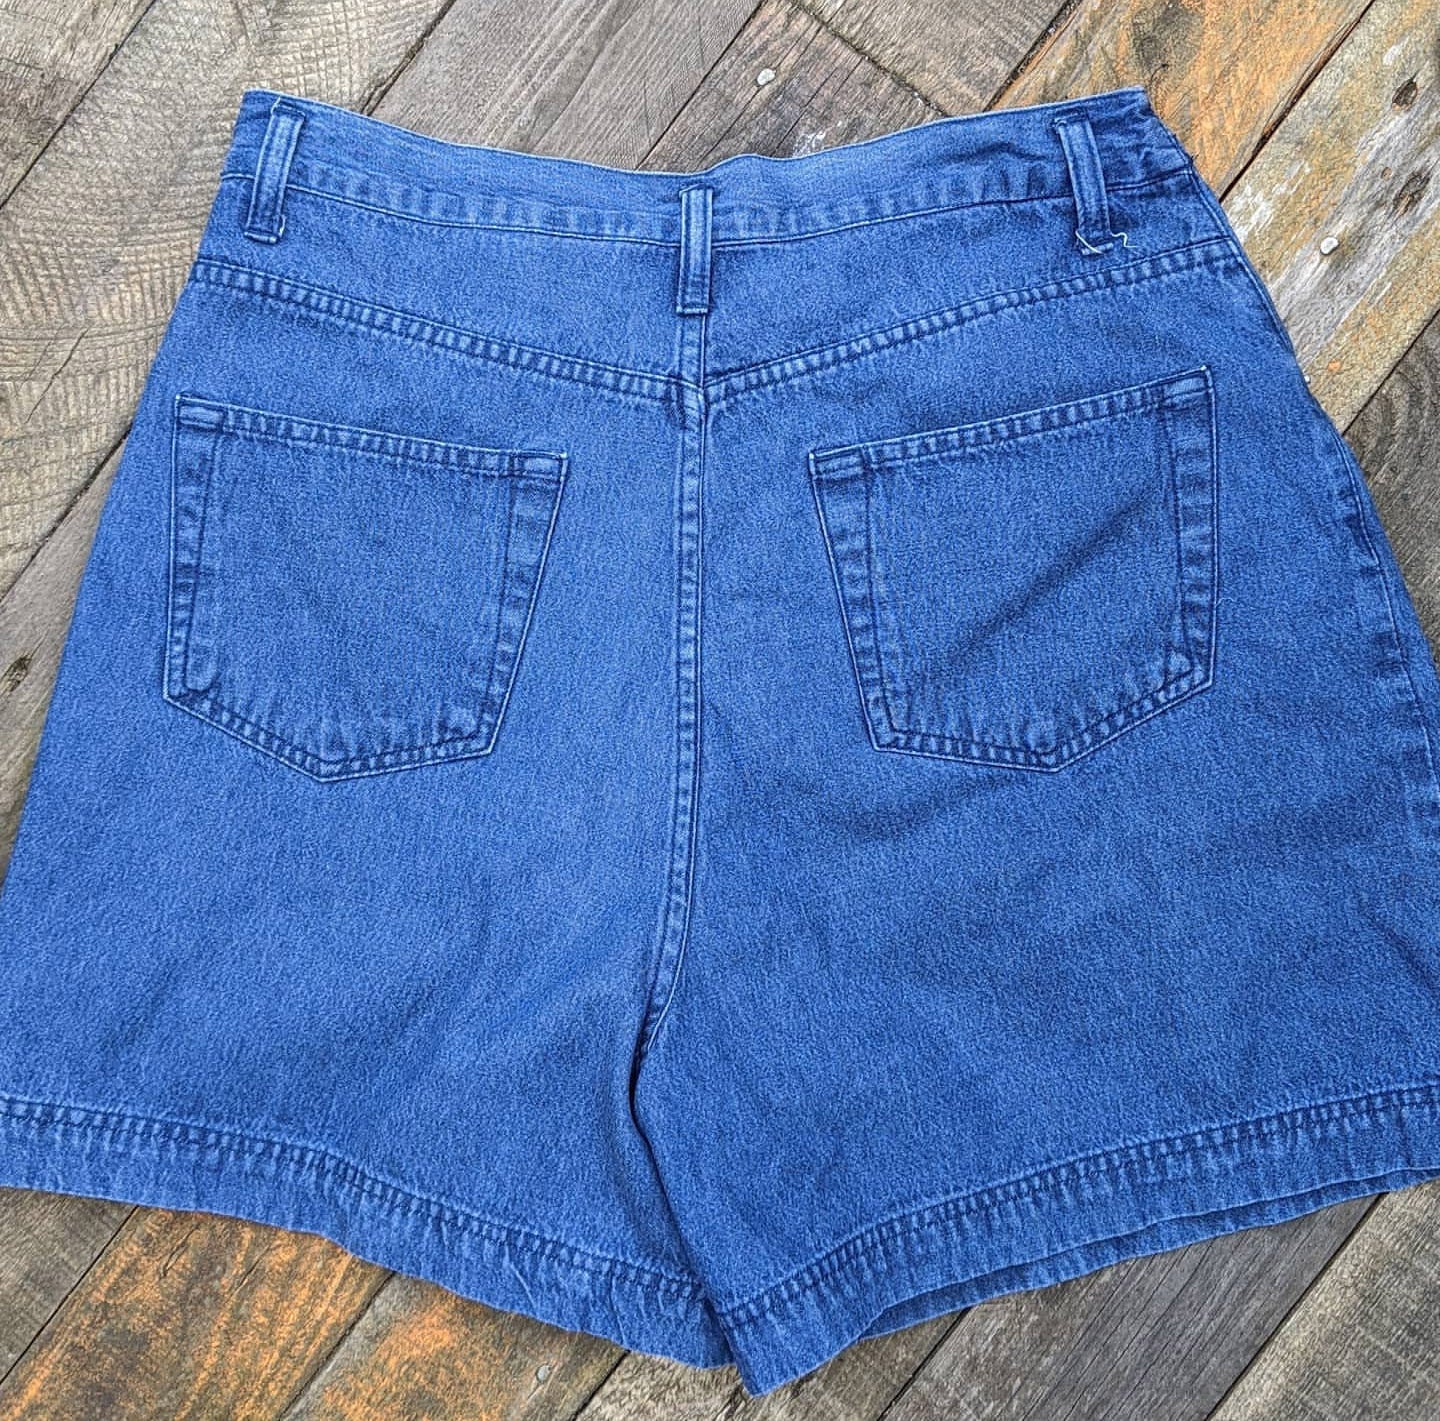 Vintage 80s high waist denim shorts, waist 30"